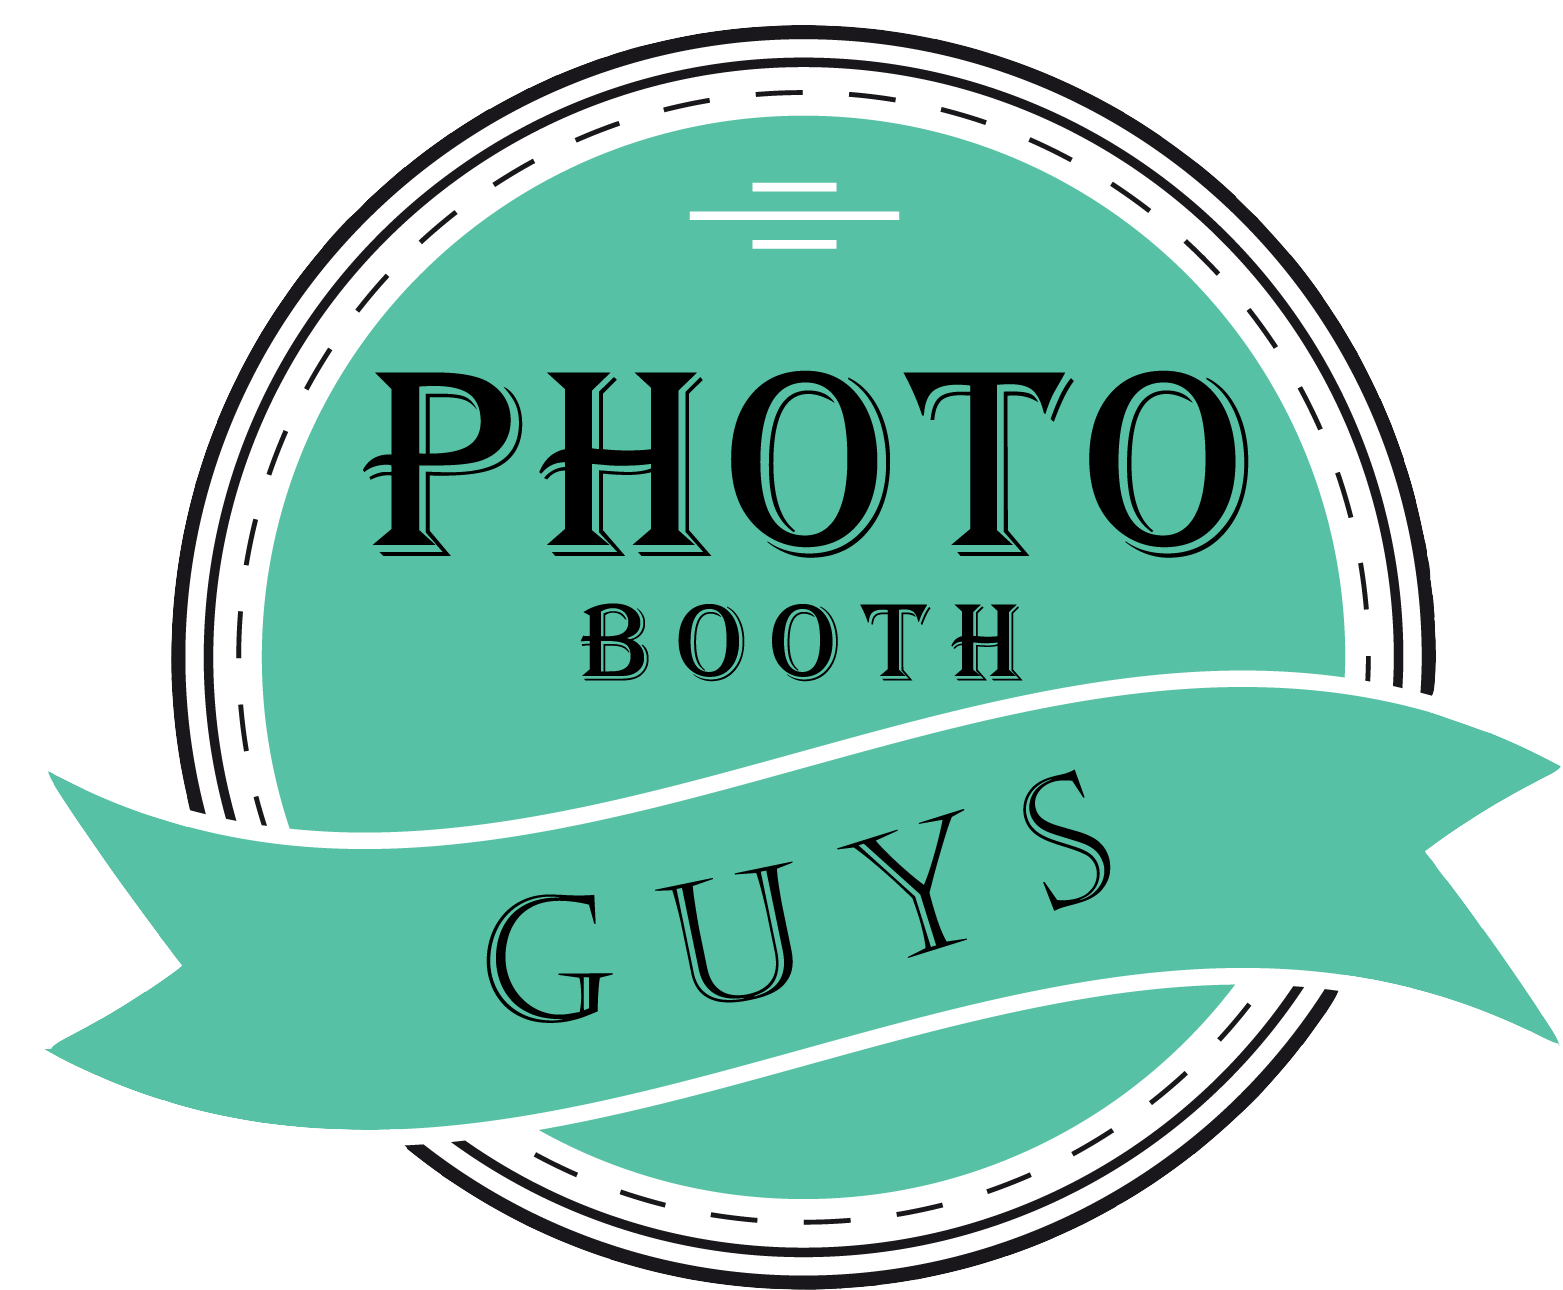 Photobooth Guys Logo